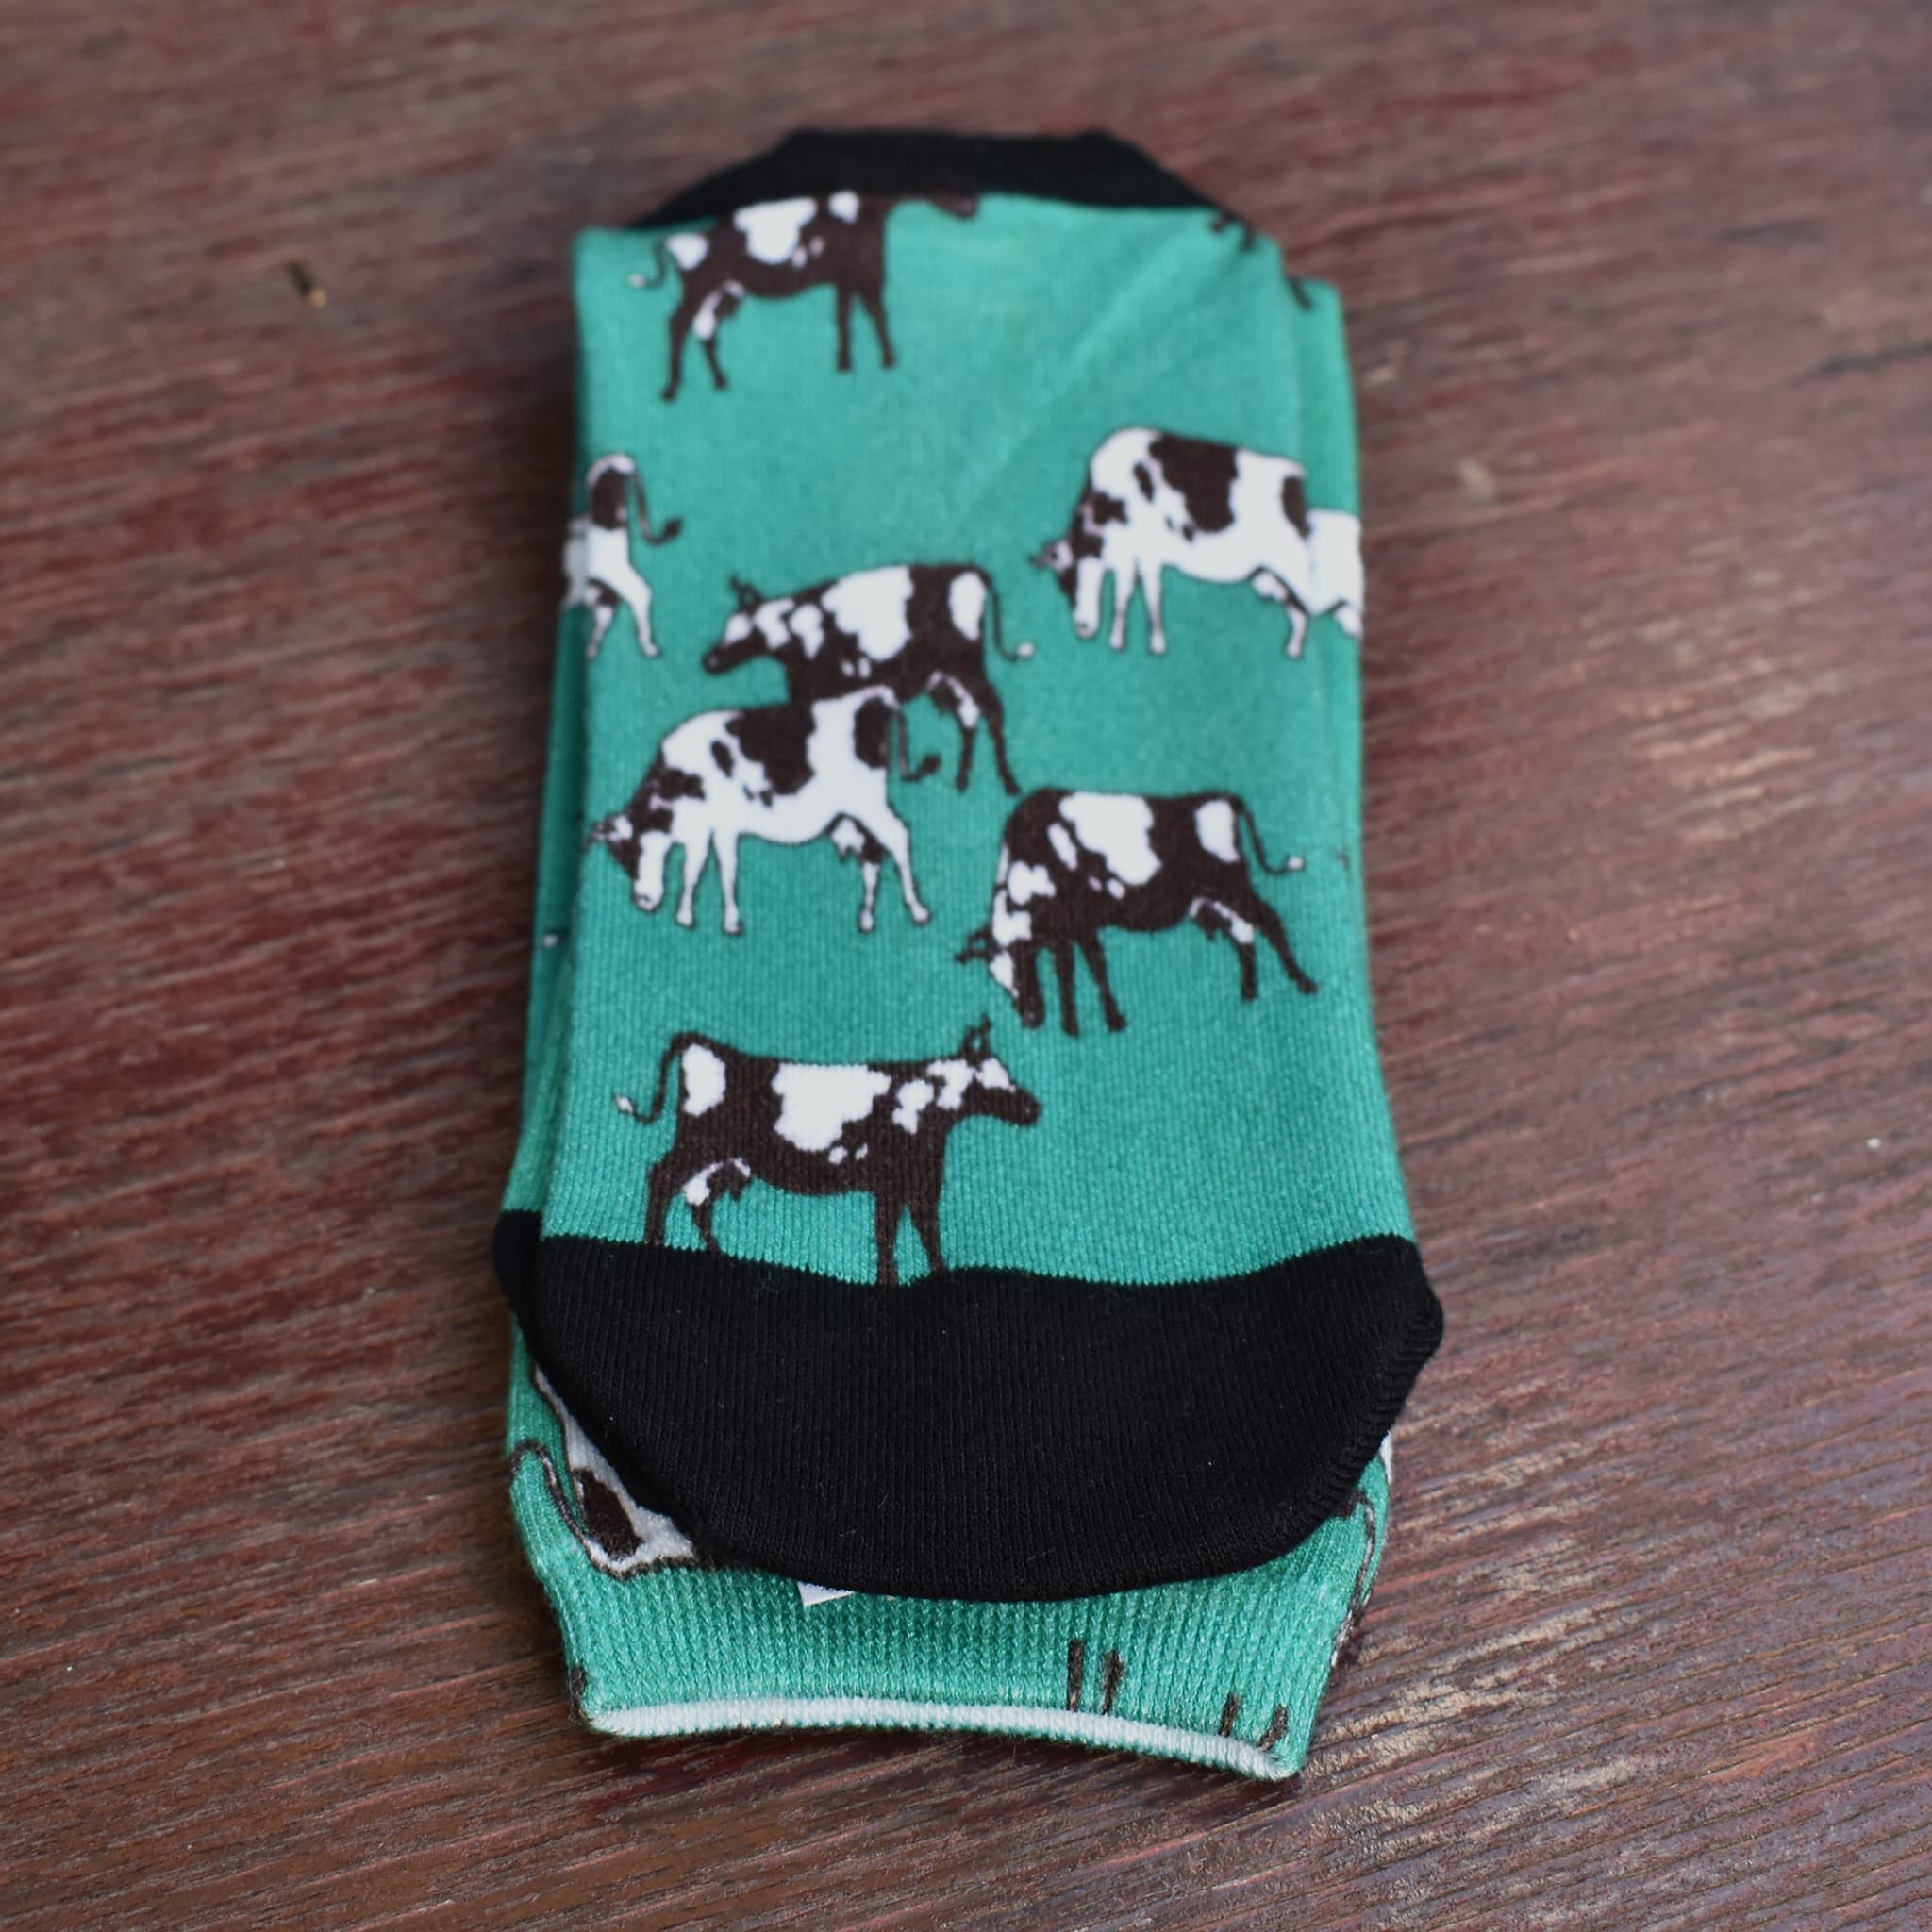 Petterned socks, cows